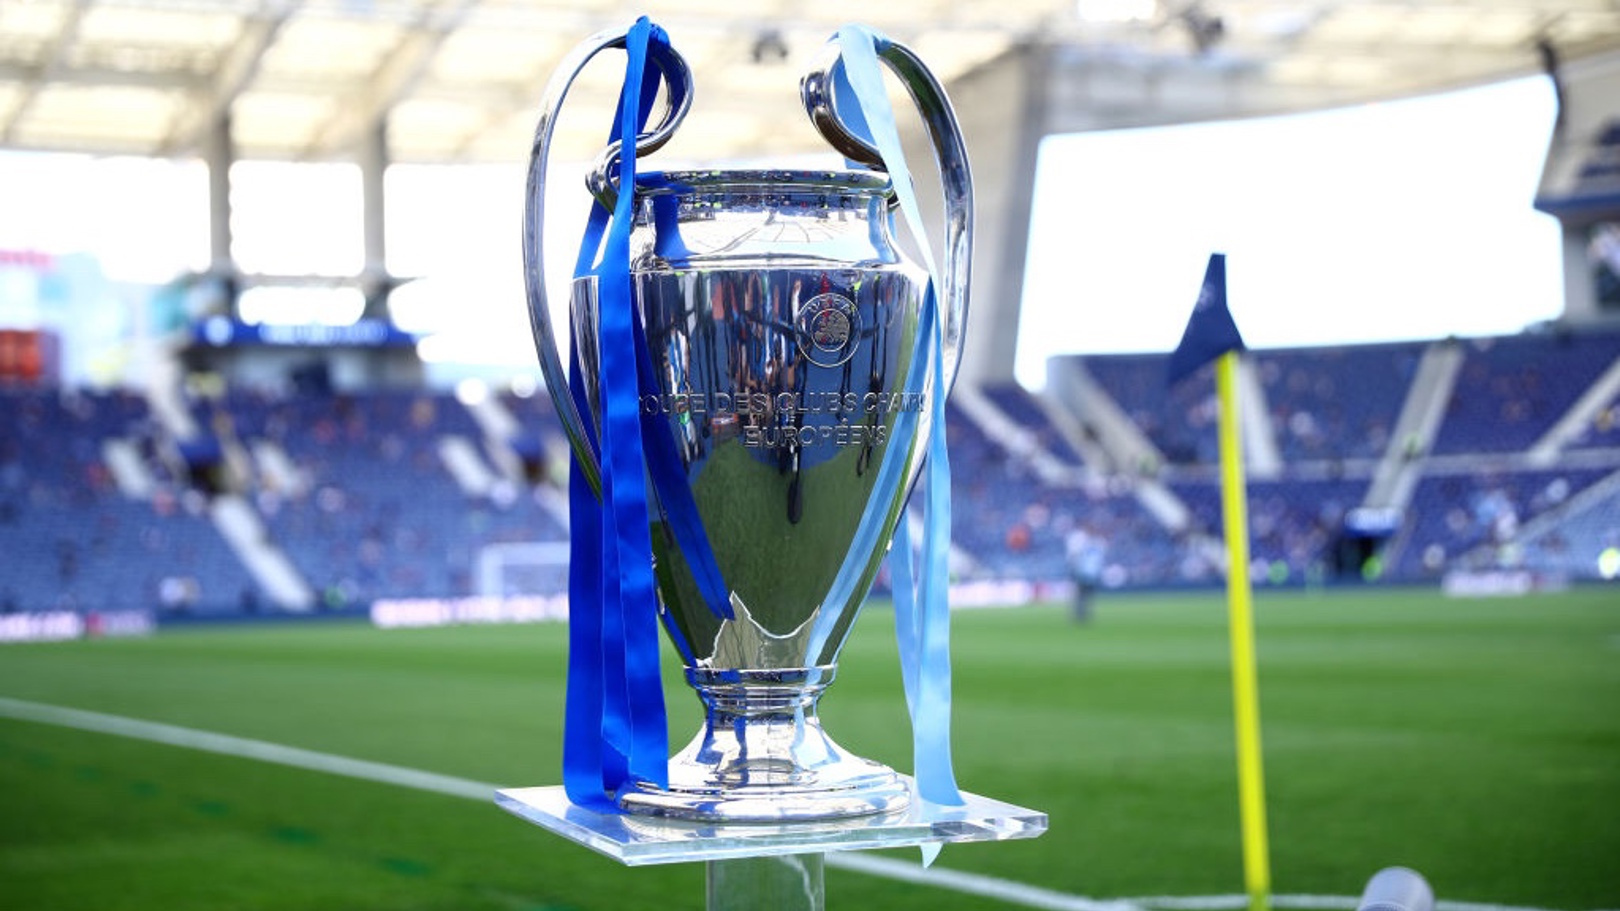 THE PRIZE: The Champions League trophy glistens pre-match.